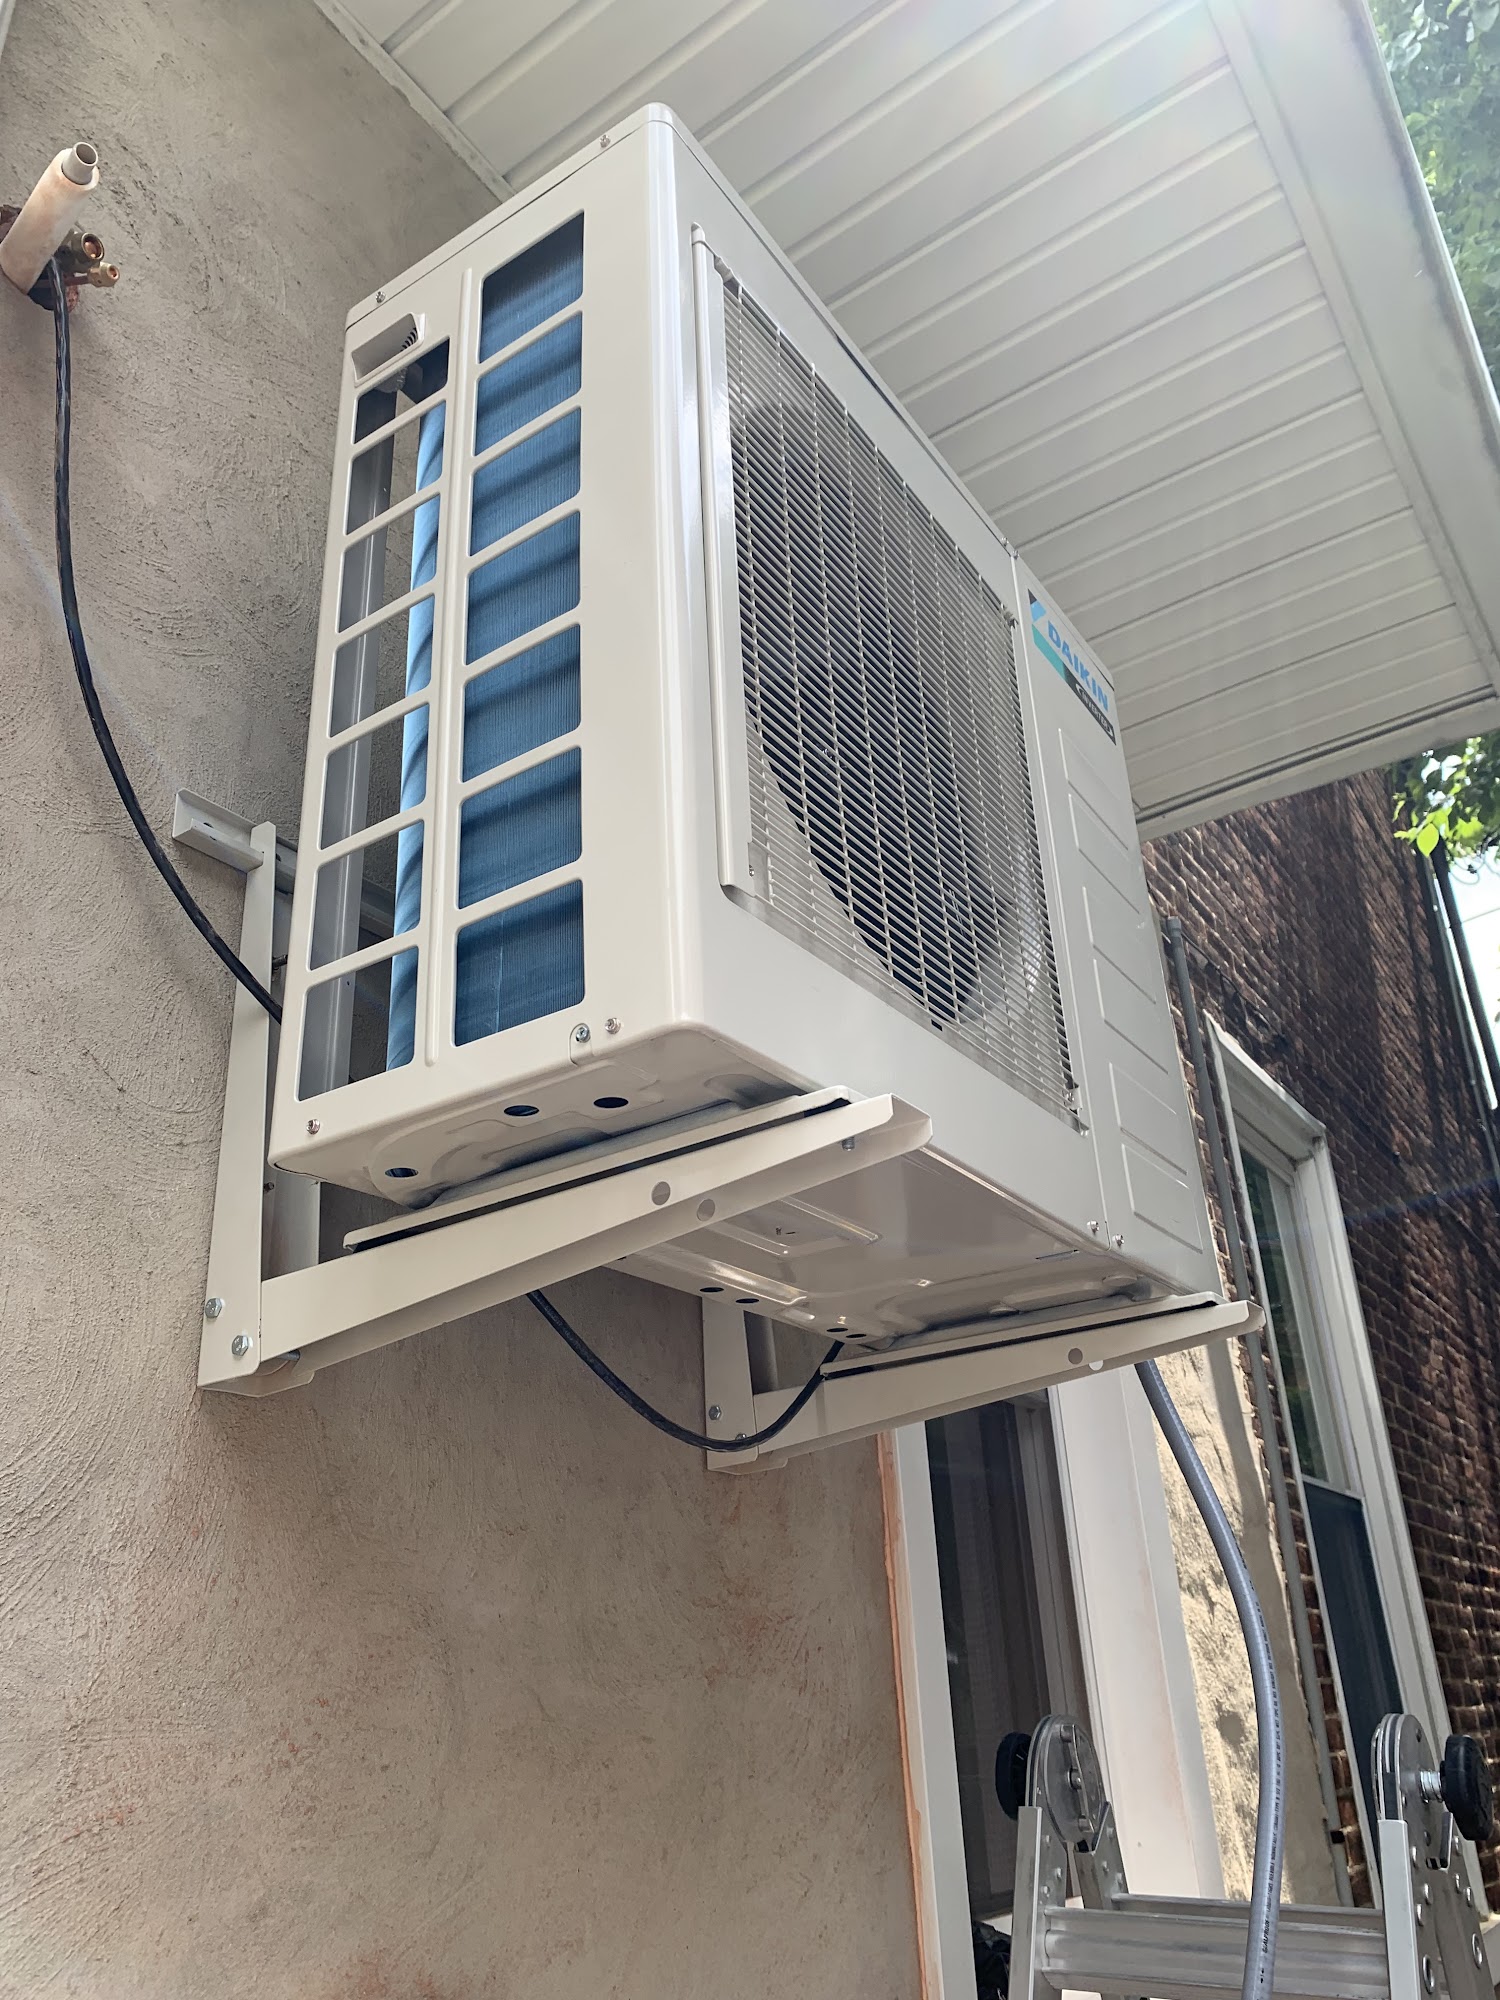 Reliance Heating & Air Conditioning, LLC 1426 Hallman Rd, Abington Pennsylvania 19001